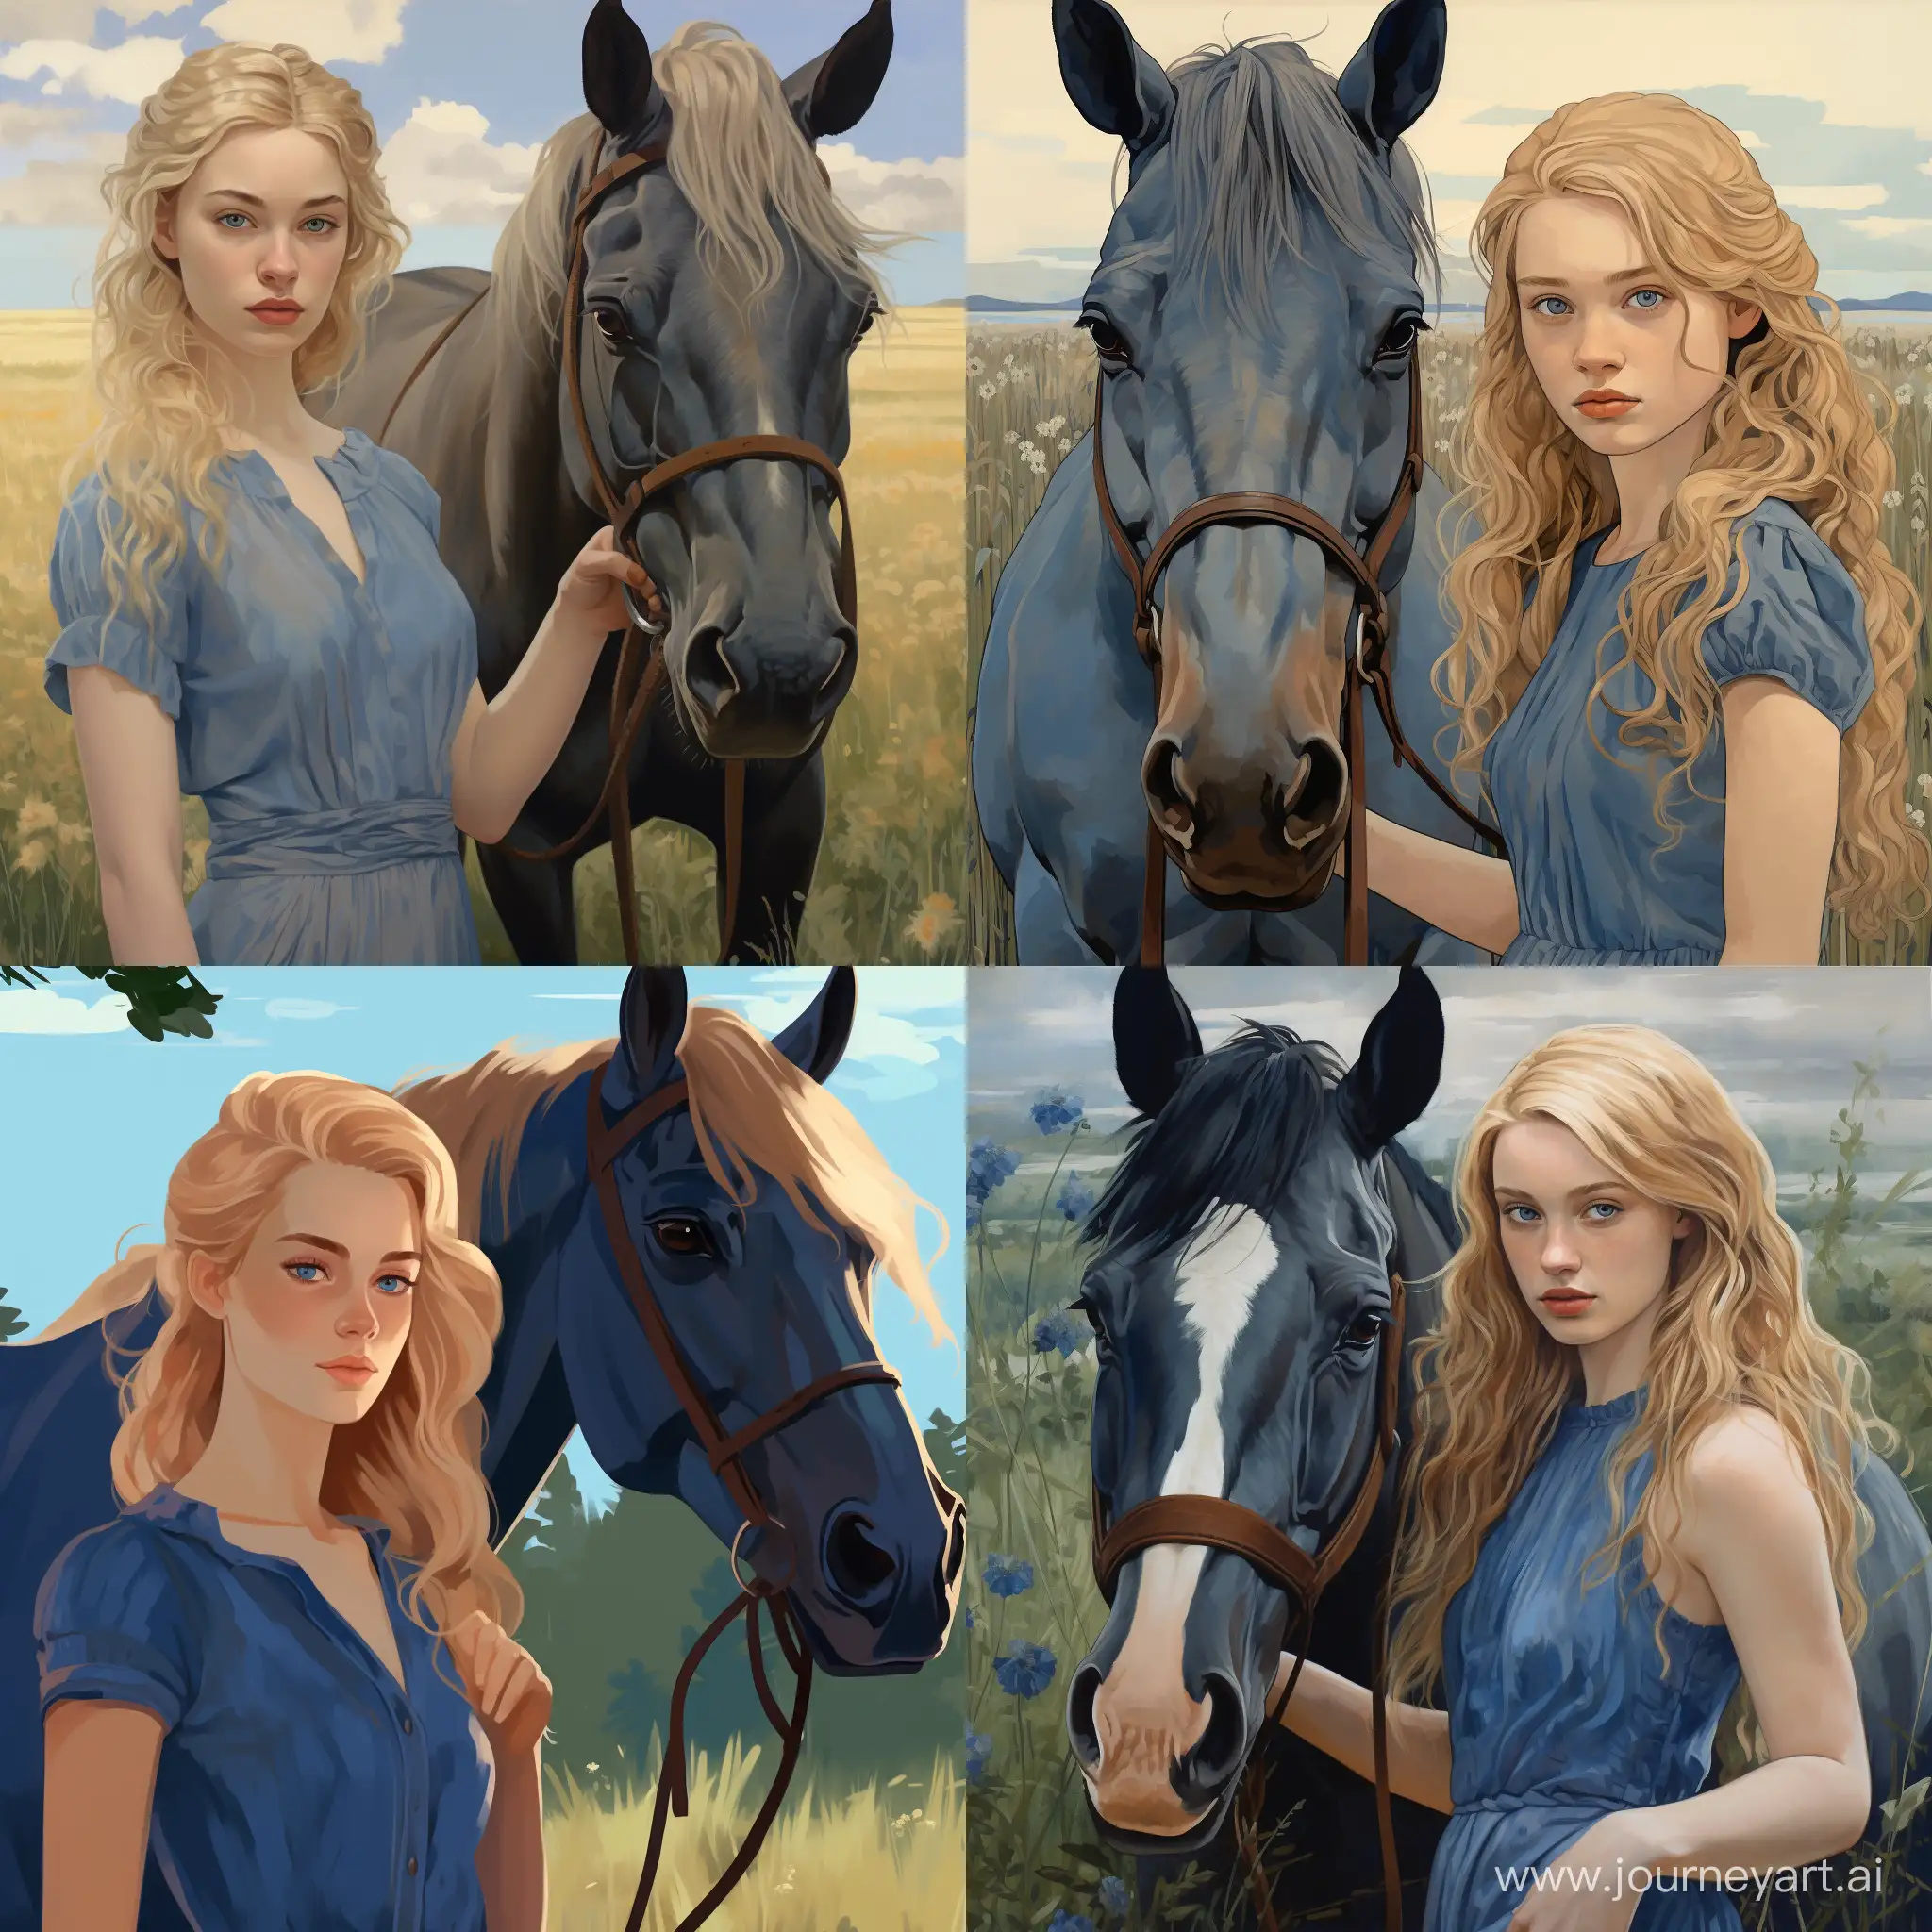 Blond-Girl-in-Blue-Dress-Petting-Horse-in-Meadow